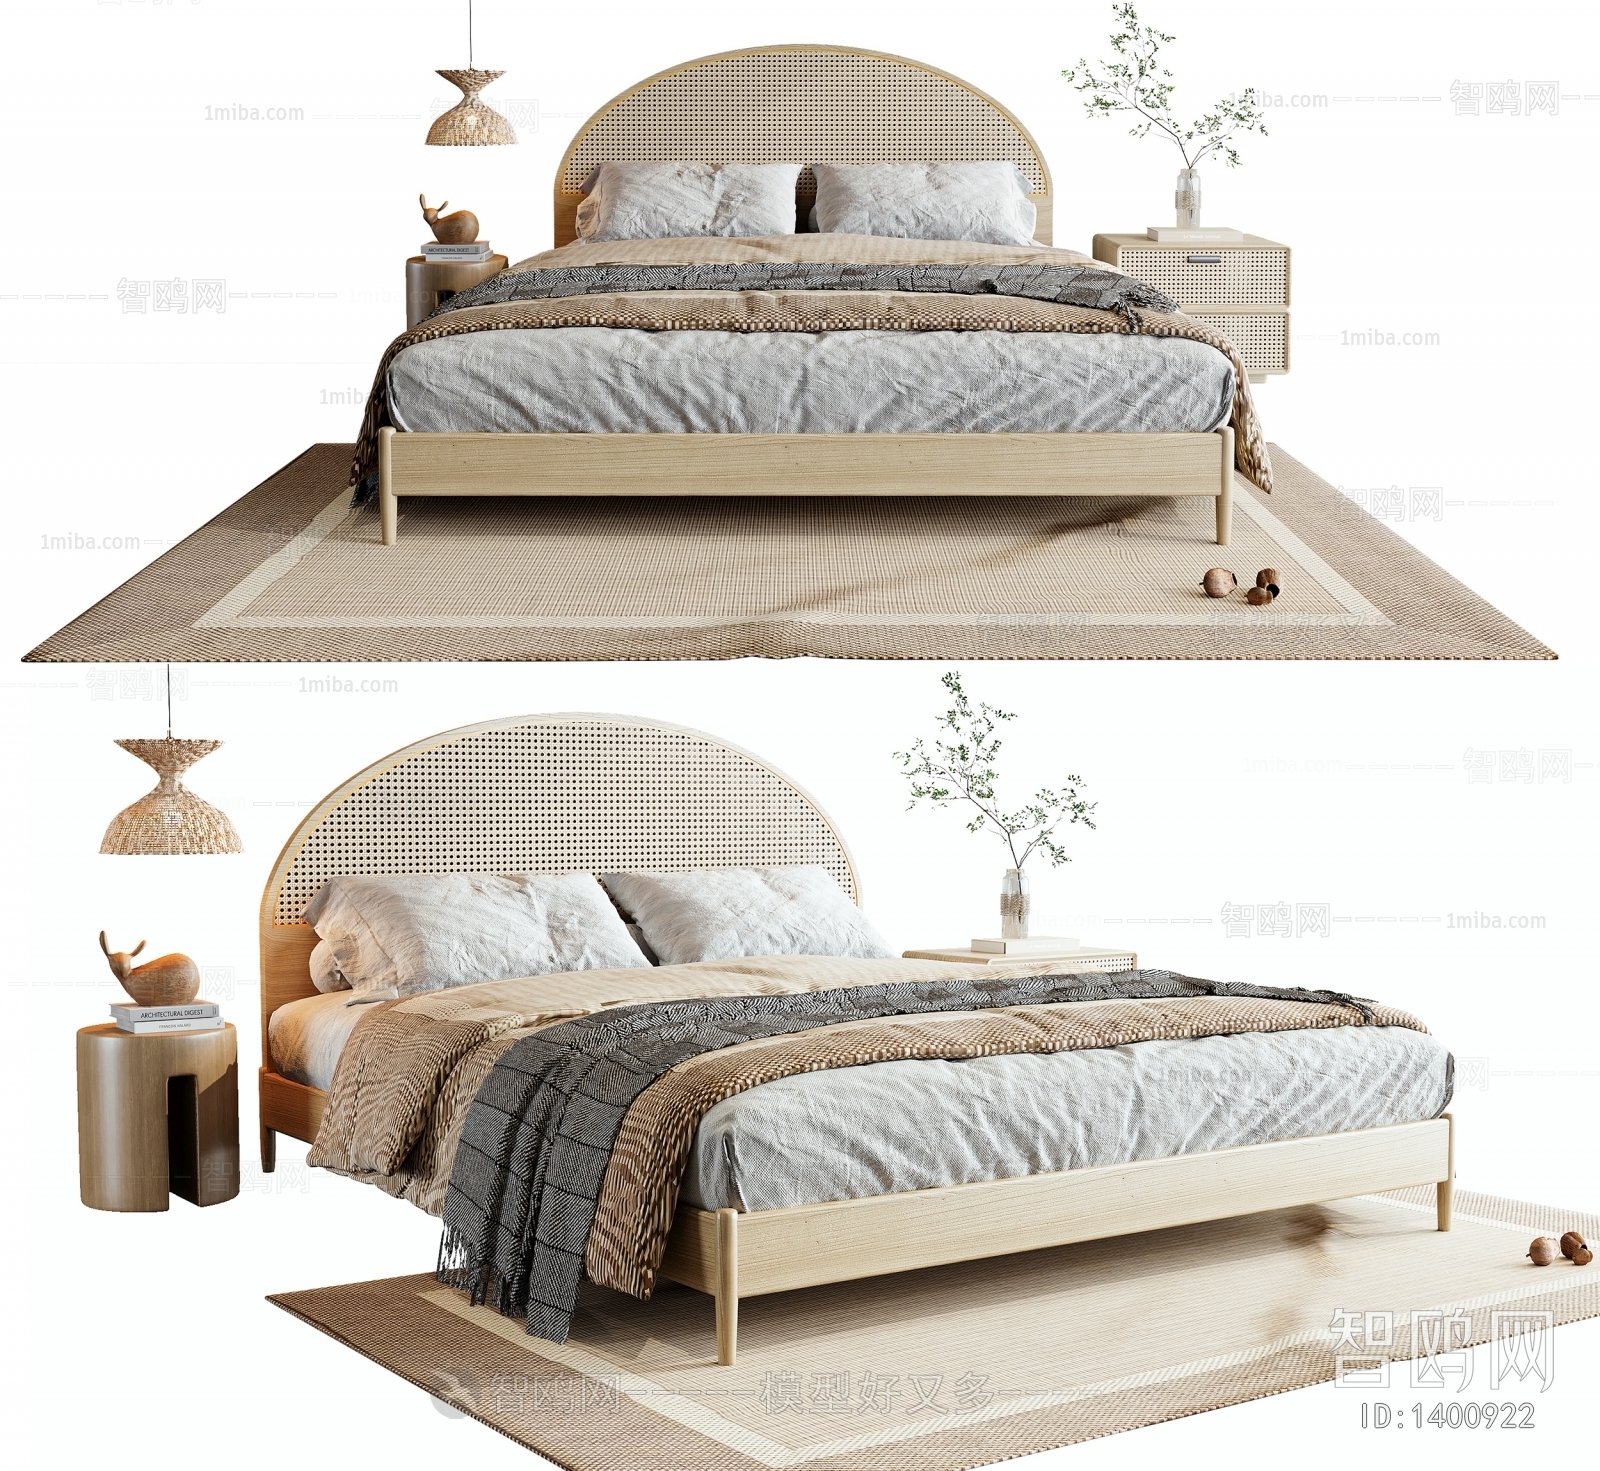 Wabi-sabi Style Child's Bed